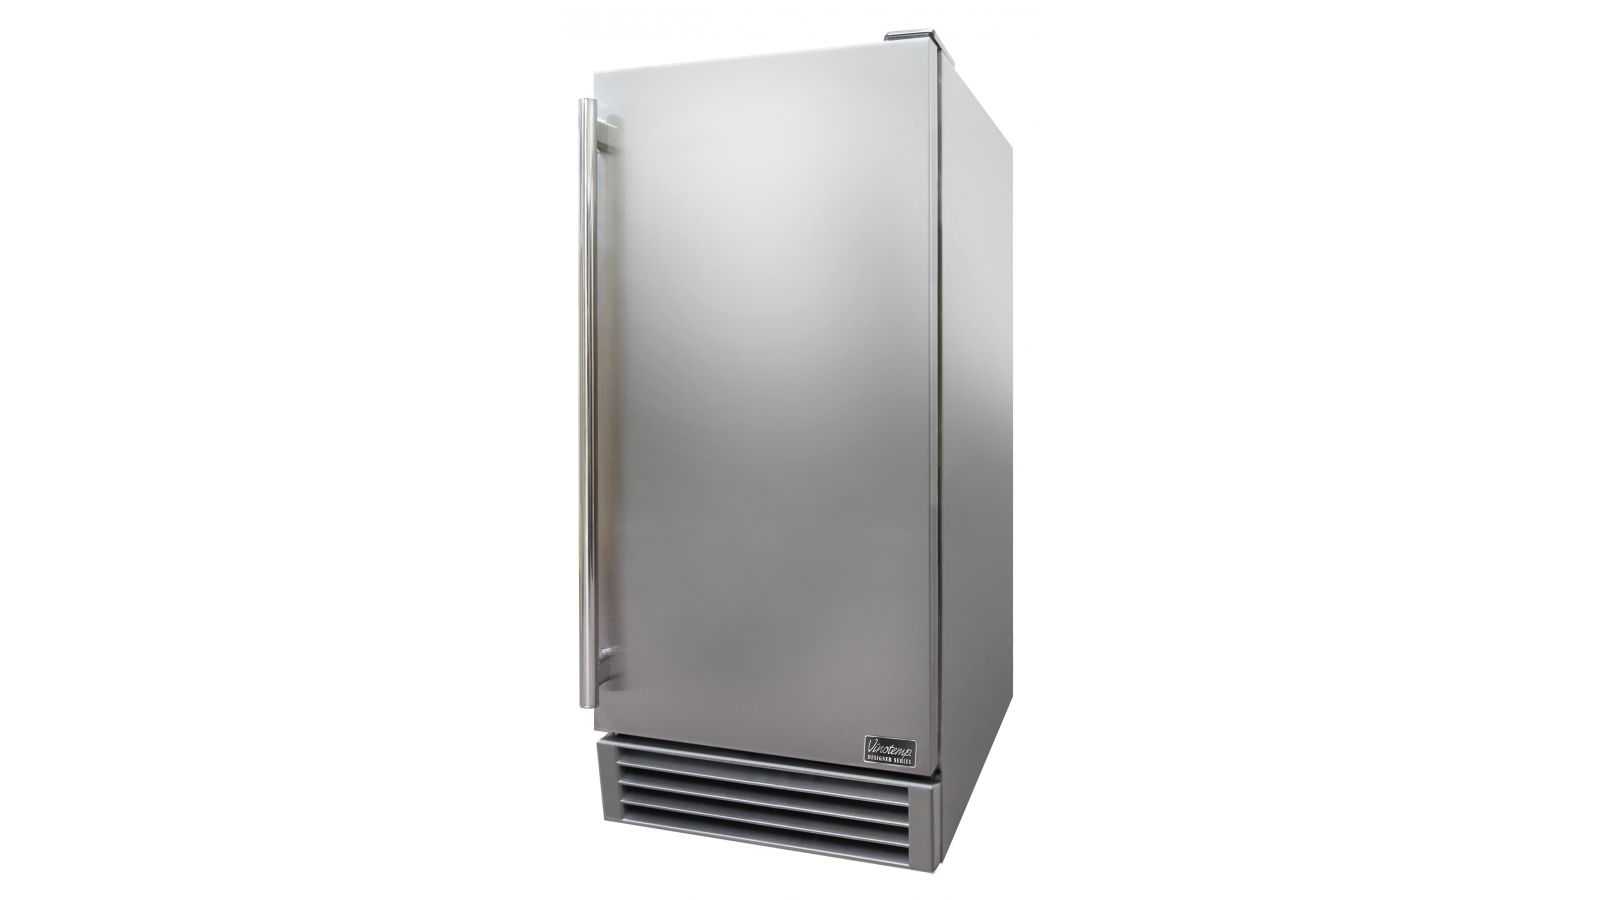 NEW: Vinotemp Designer Series Indoor/Outdoor Refrigerator